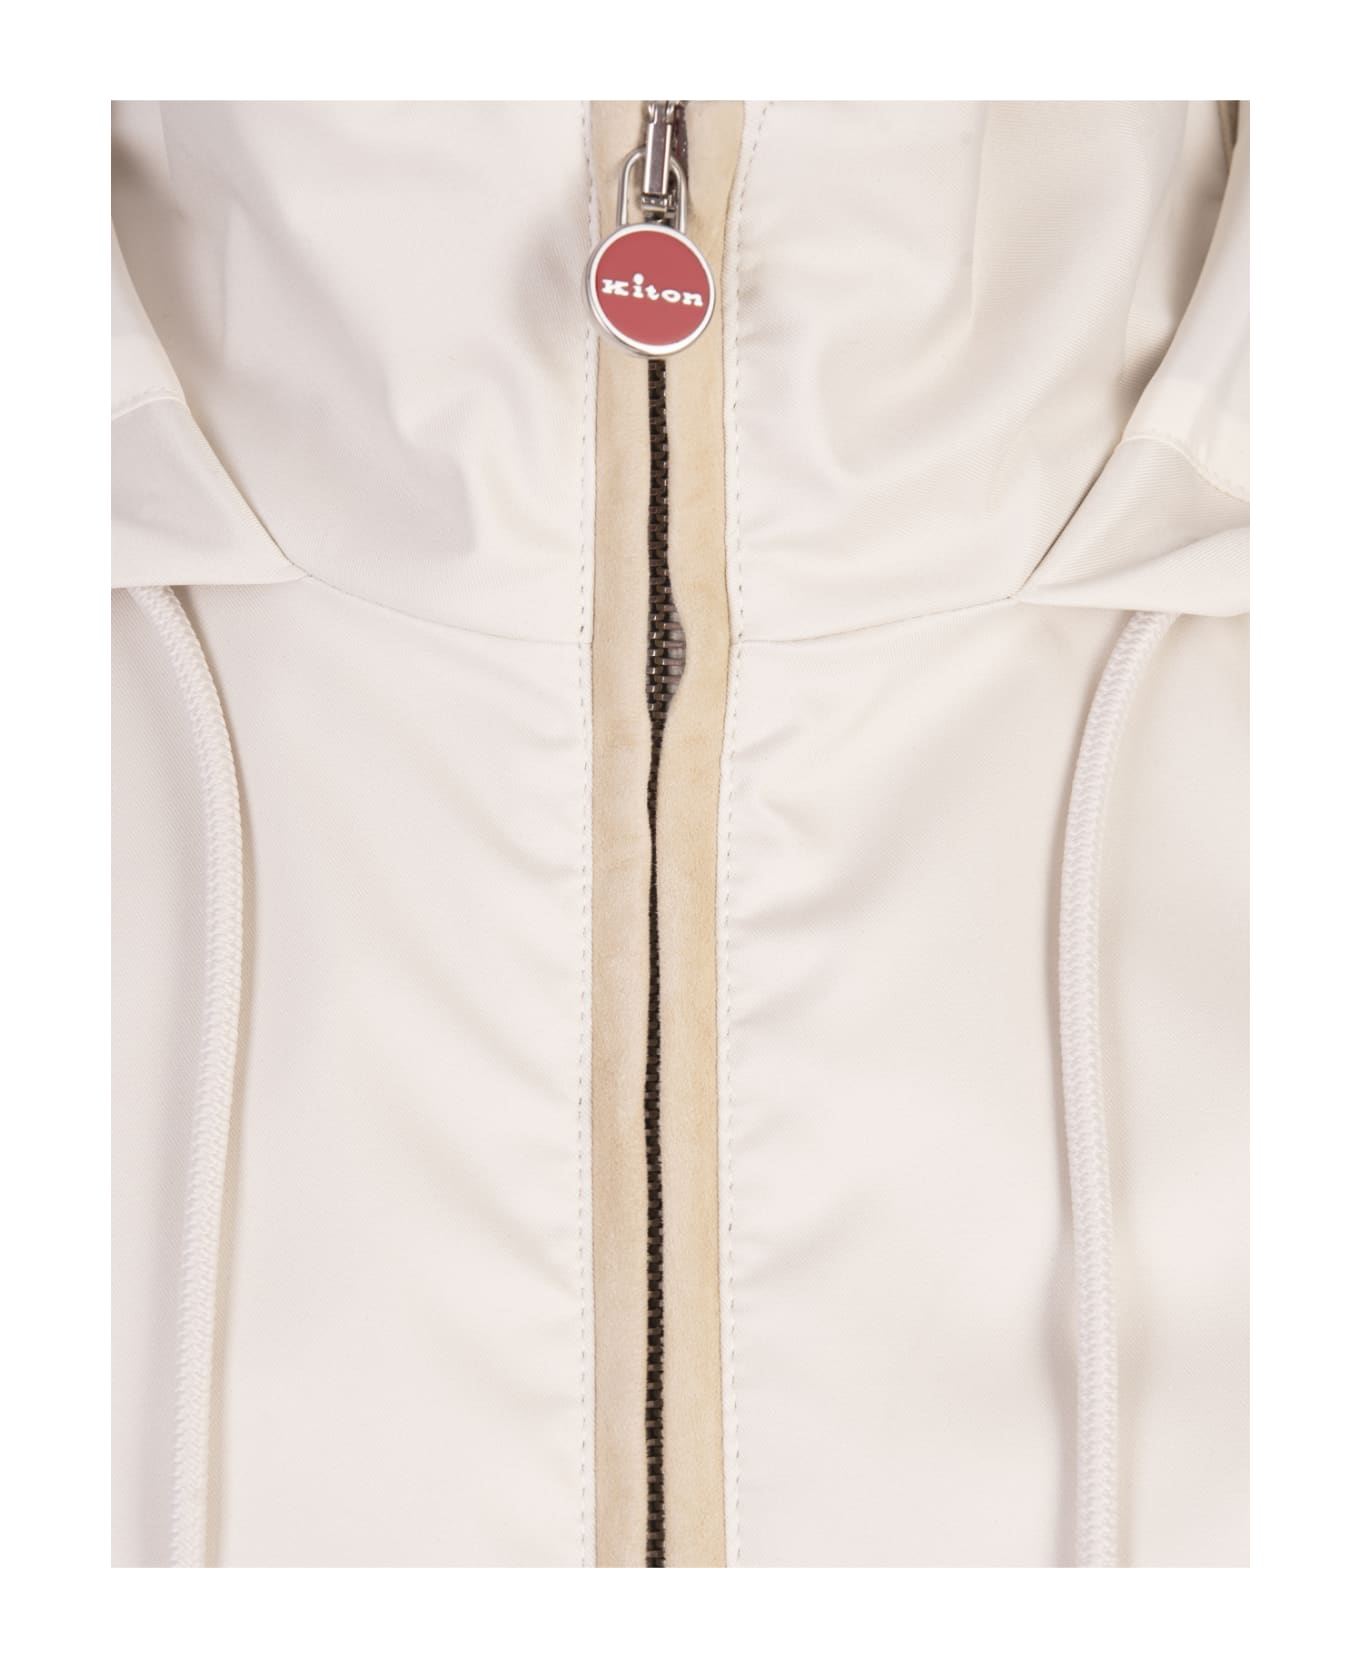 Kiton Lightweight Jacket In White Technical Fabric - White レインコート